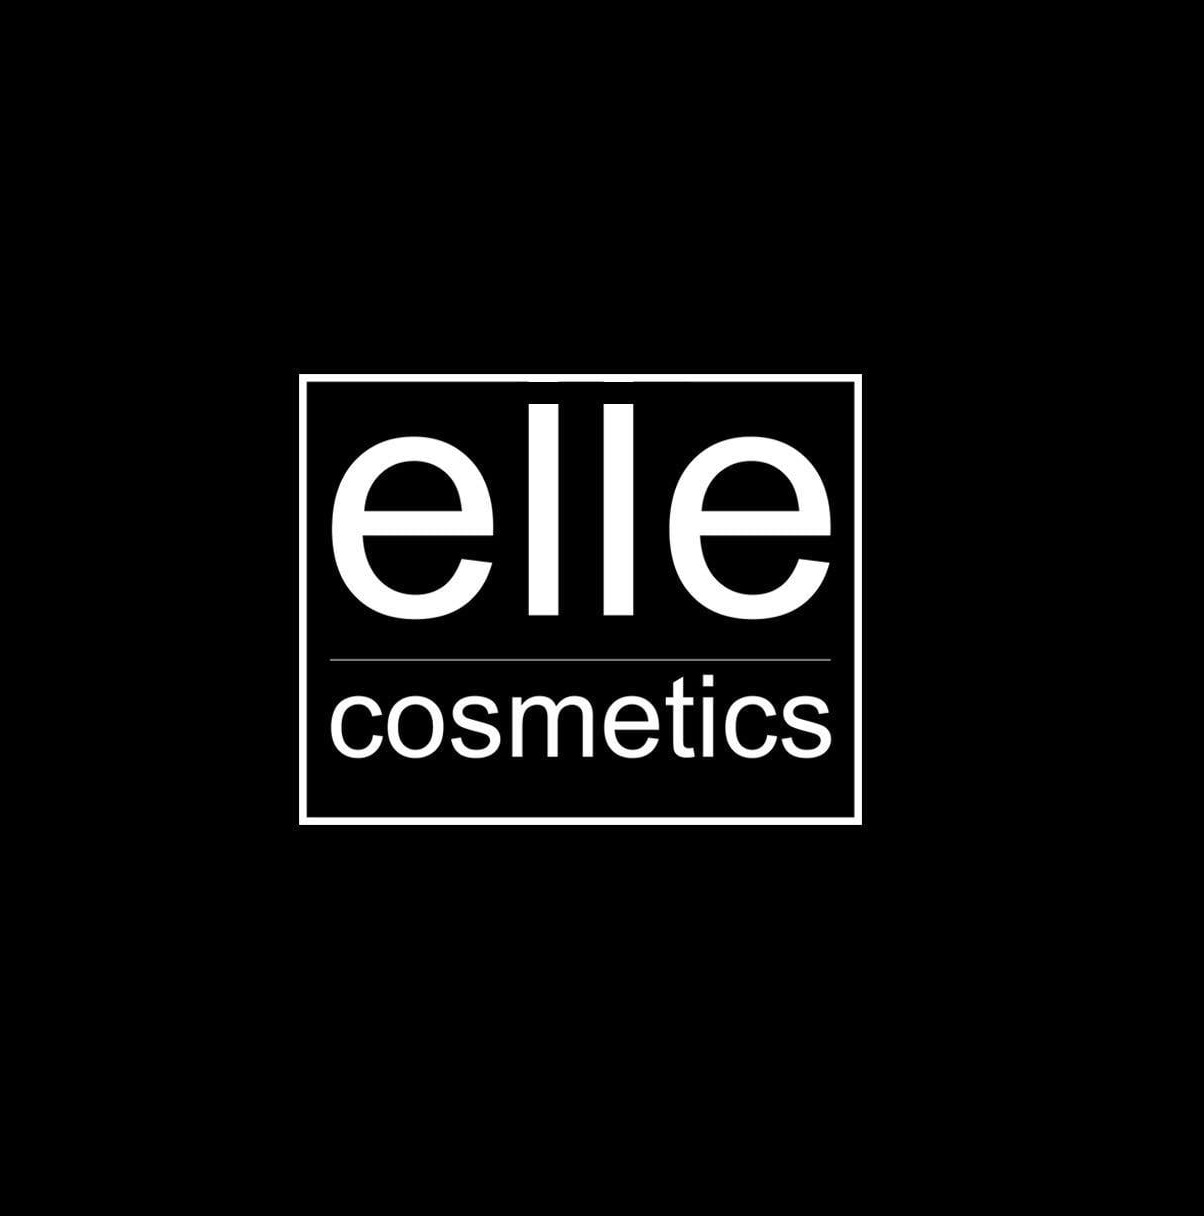 Elle cosmetics egypt company